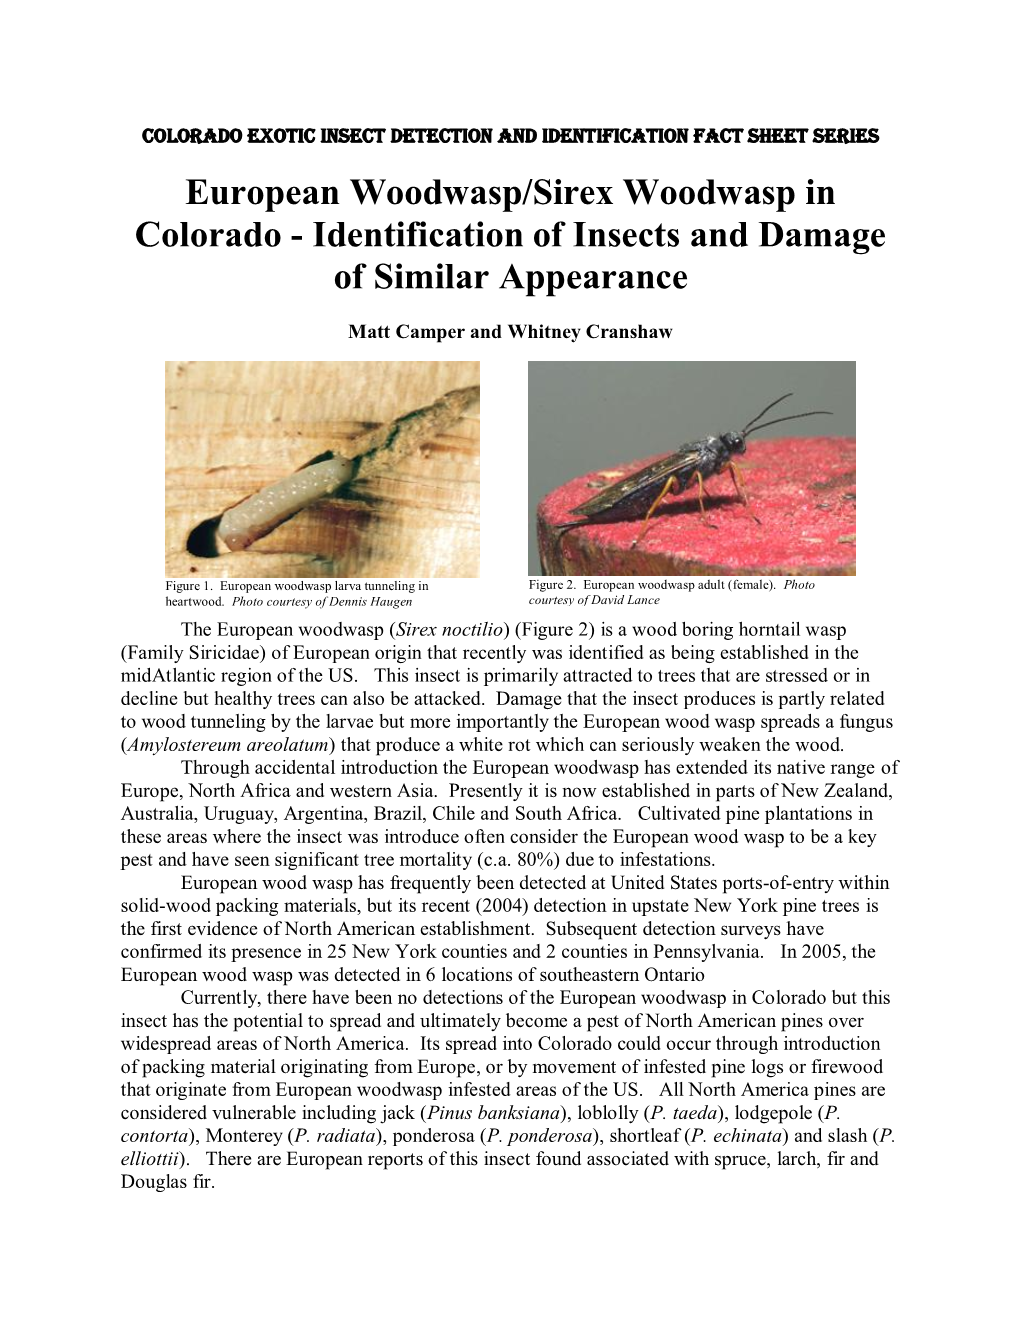 Eurpean Woodwasp/Sirex Woodwasp in Colorado